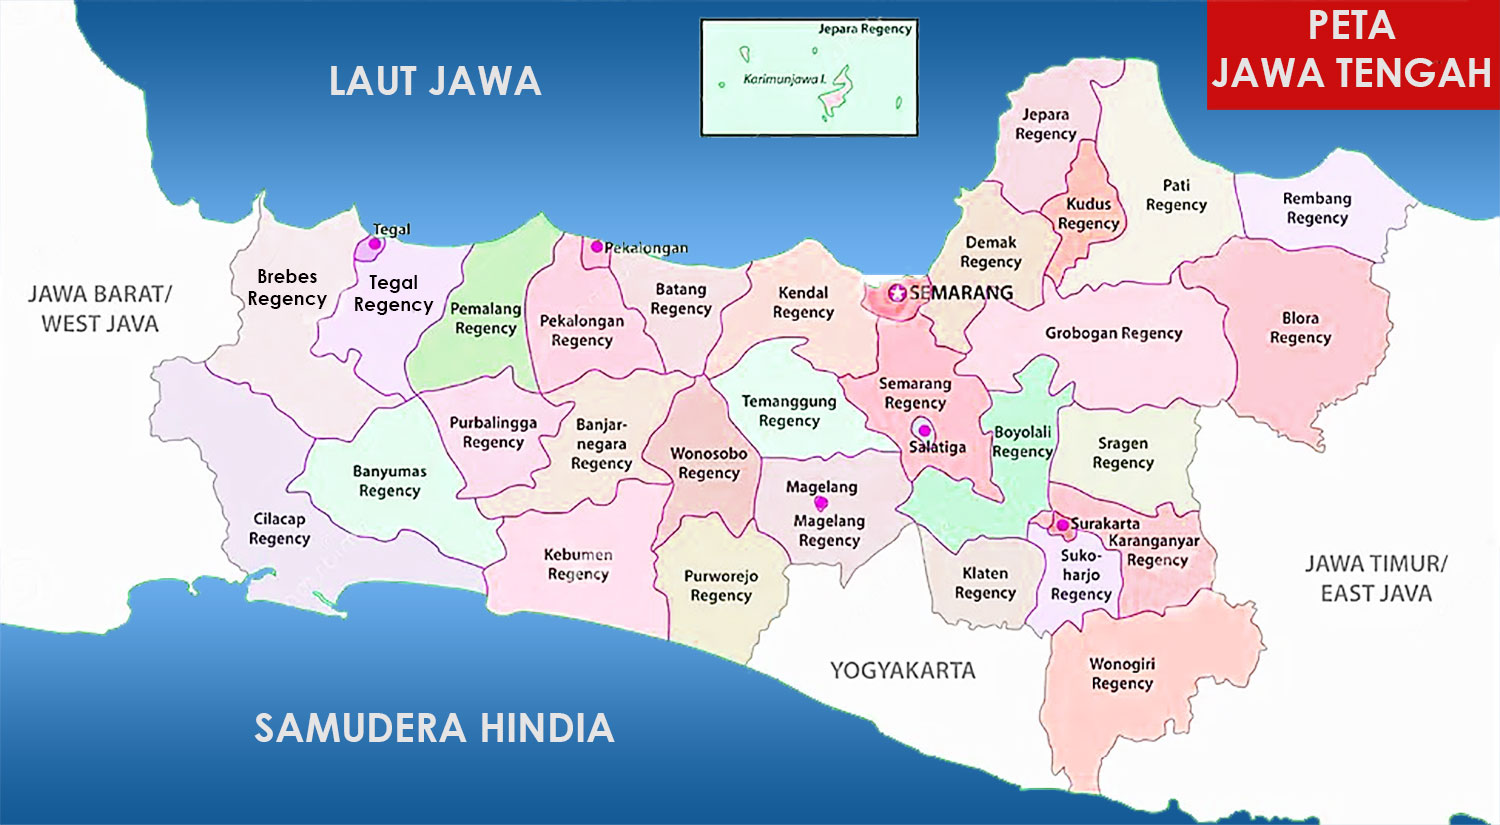 Peta kbupaten dan kota di Jawa Tengah